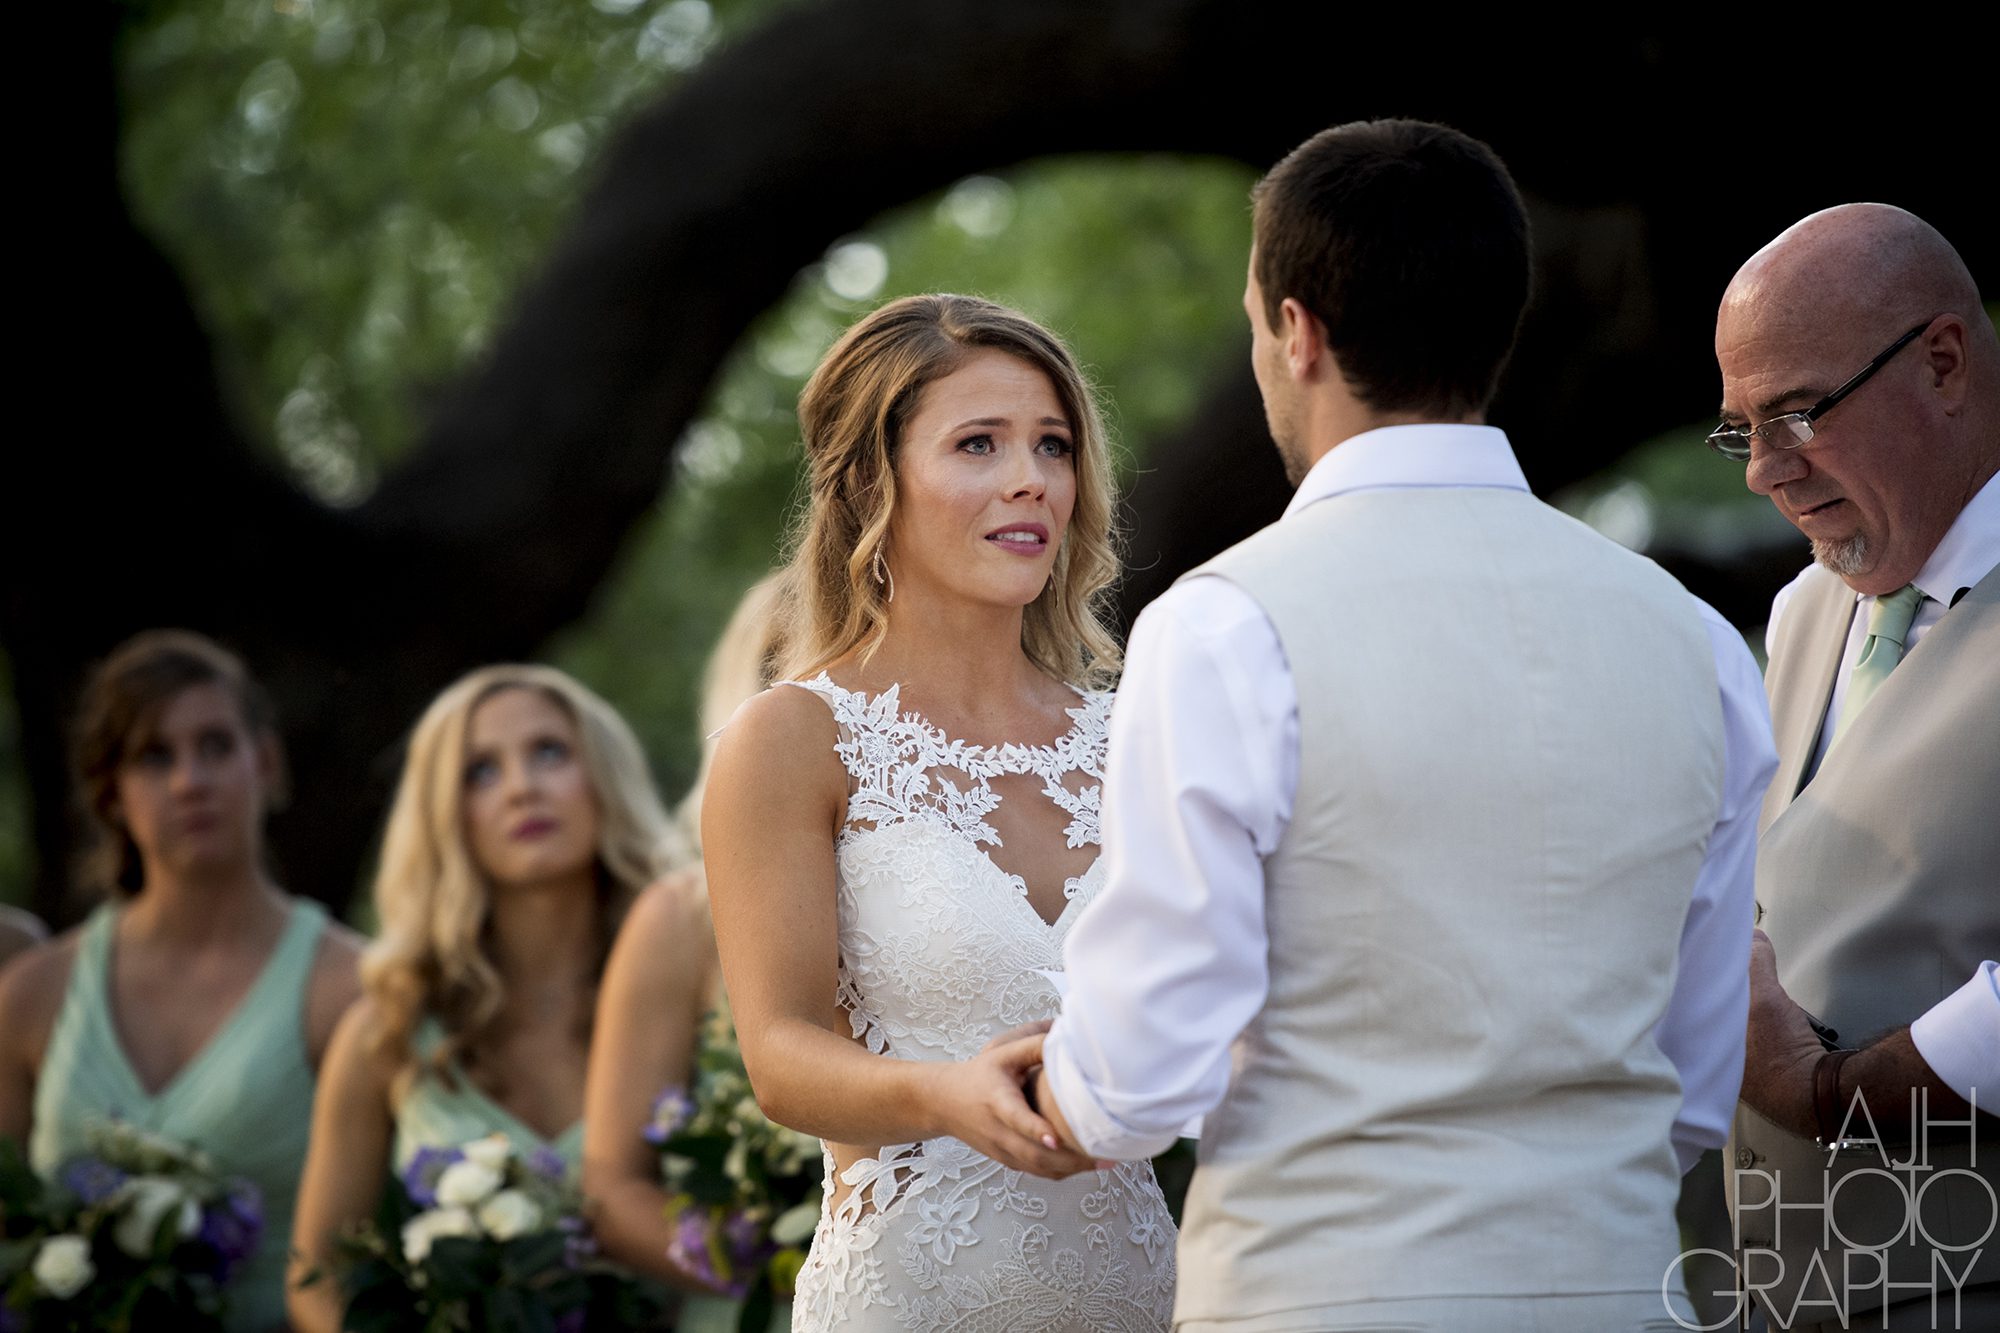 Sacred Oaks Wedding - AJH Photography